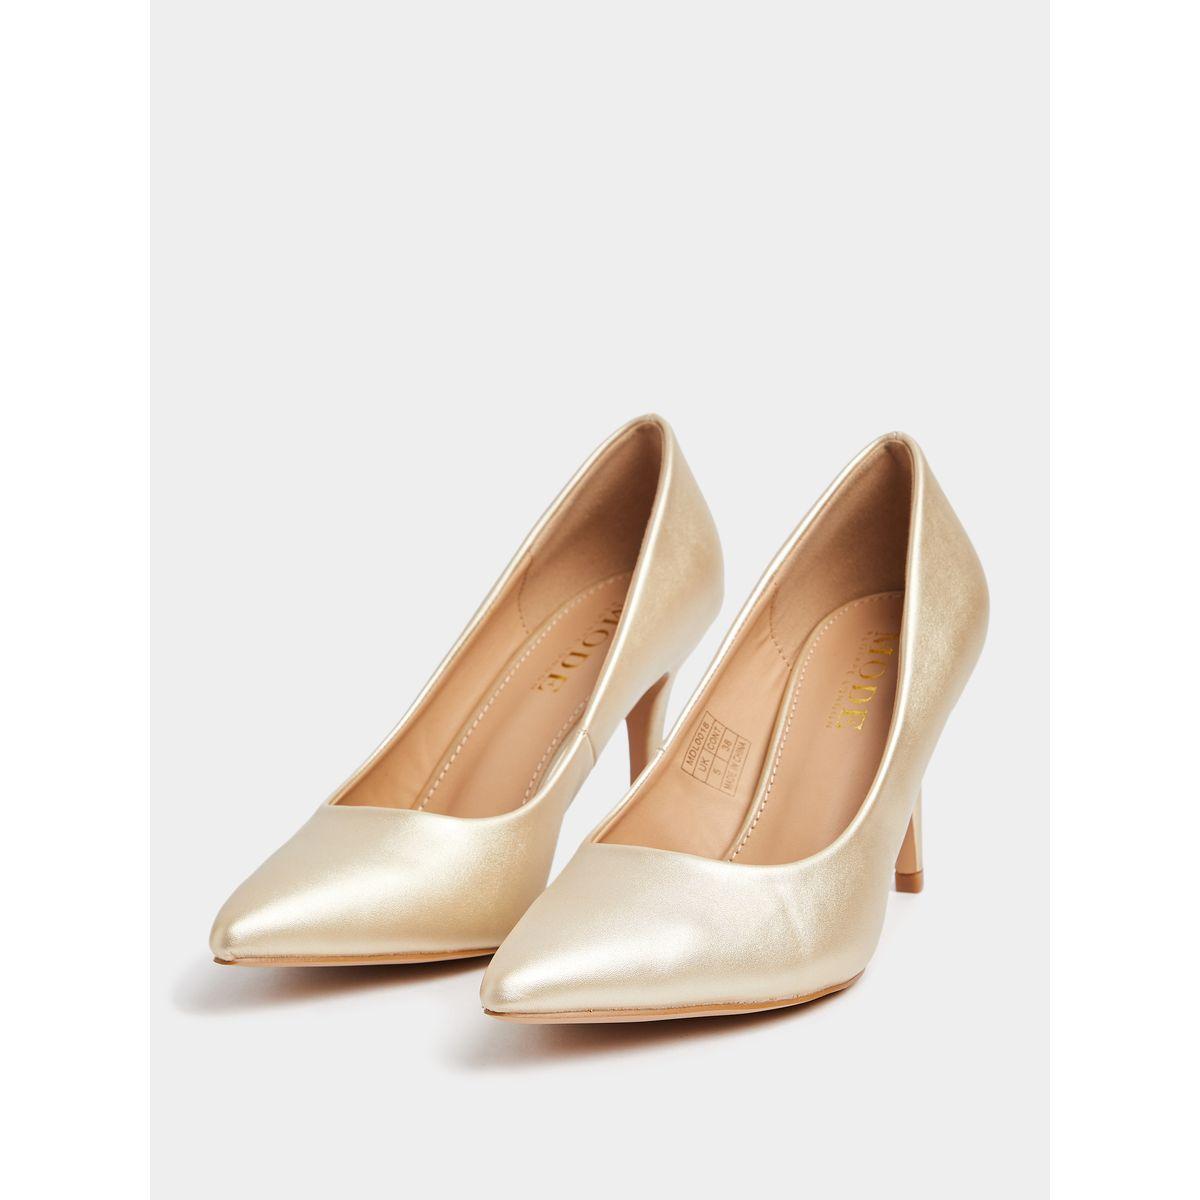 Talbots Peep Toe Heels for Women | Mercari